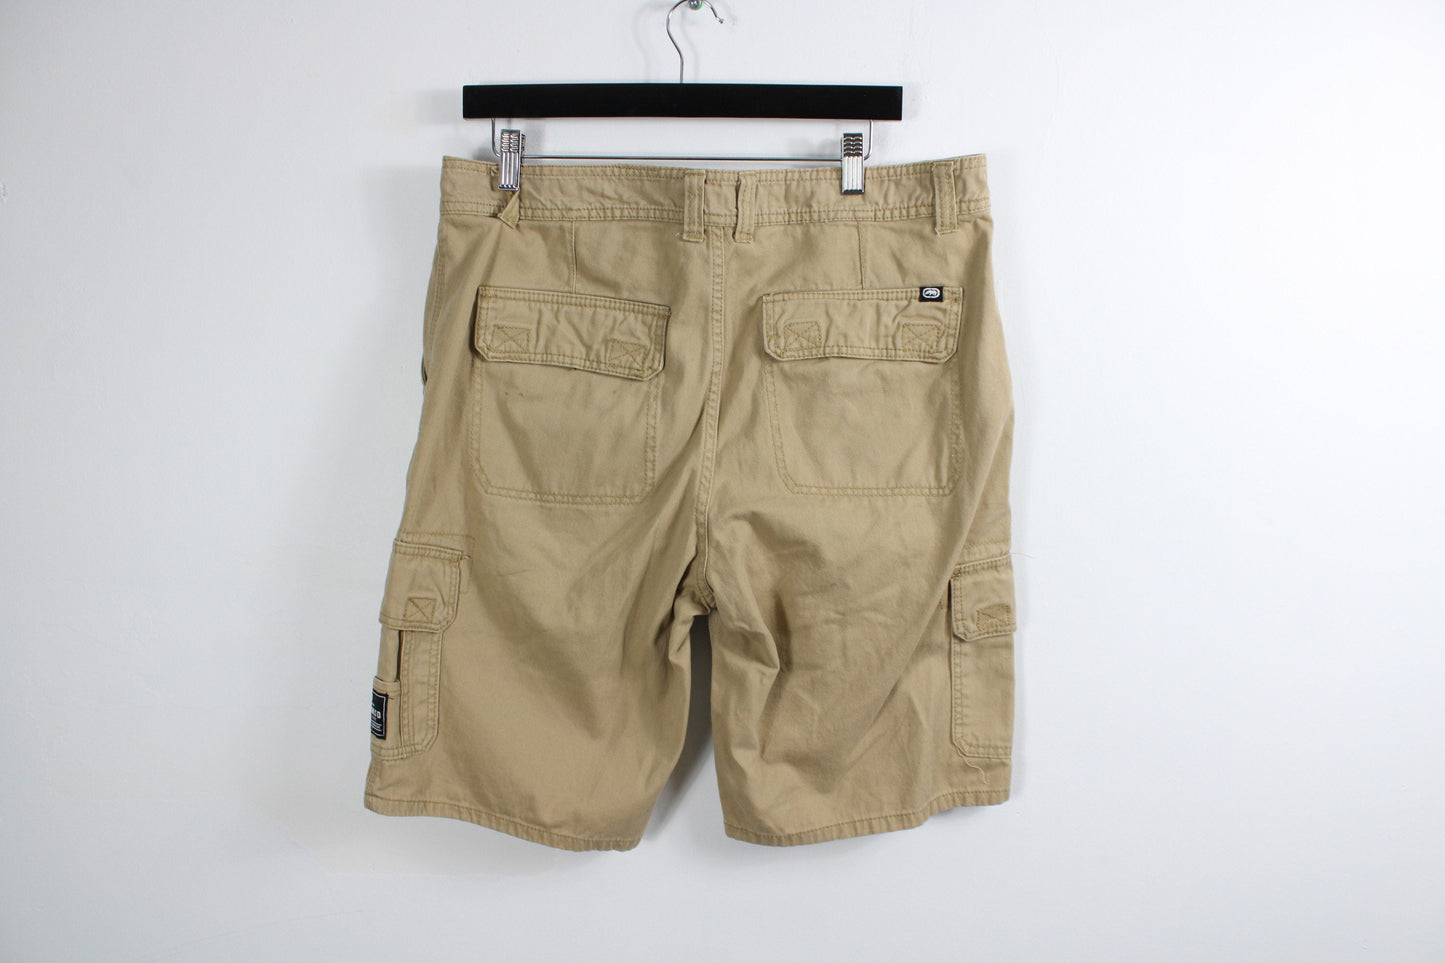 Ecko Jean Shorts / 90s Vintage Cargo Trunks Streetwear / Hip Hop Clothing / Size 34